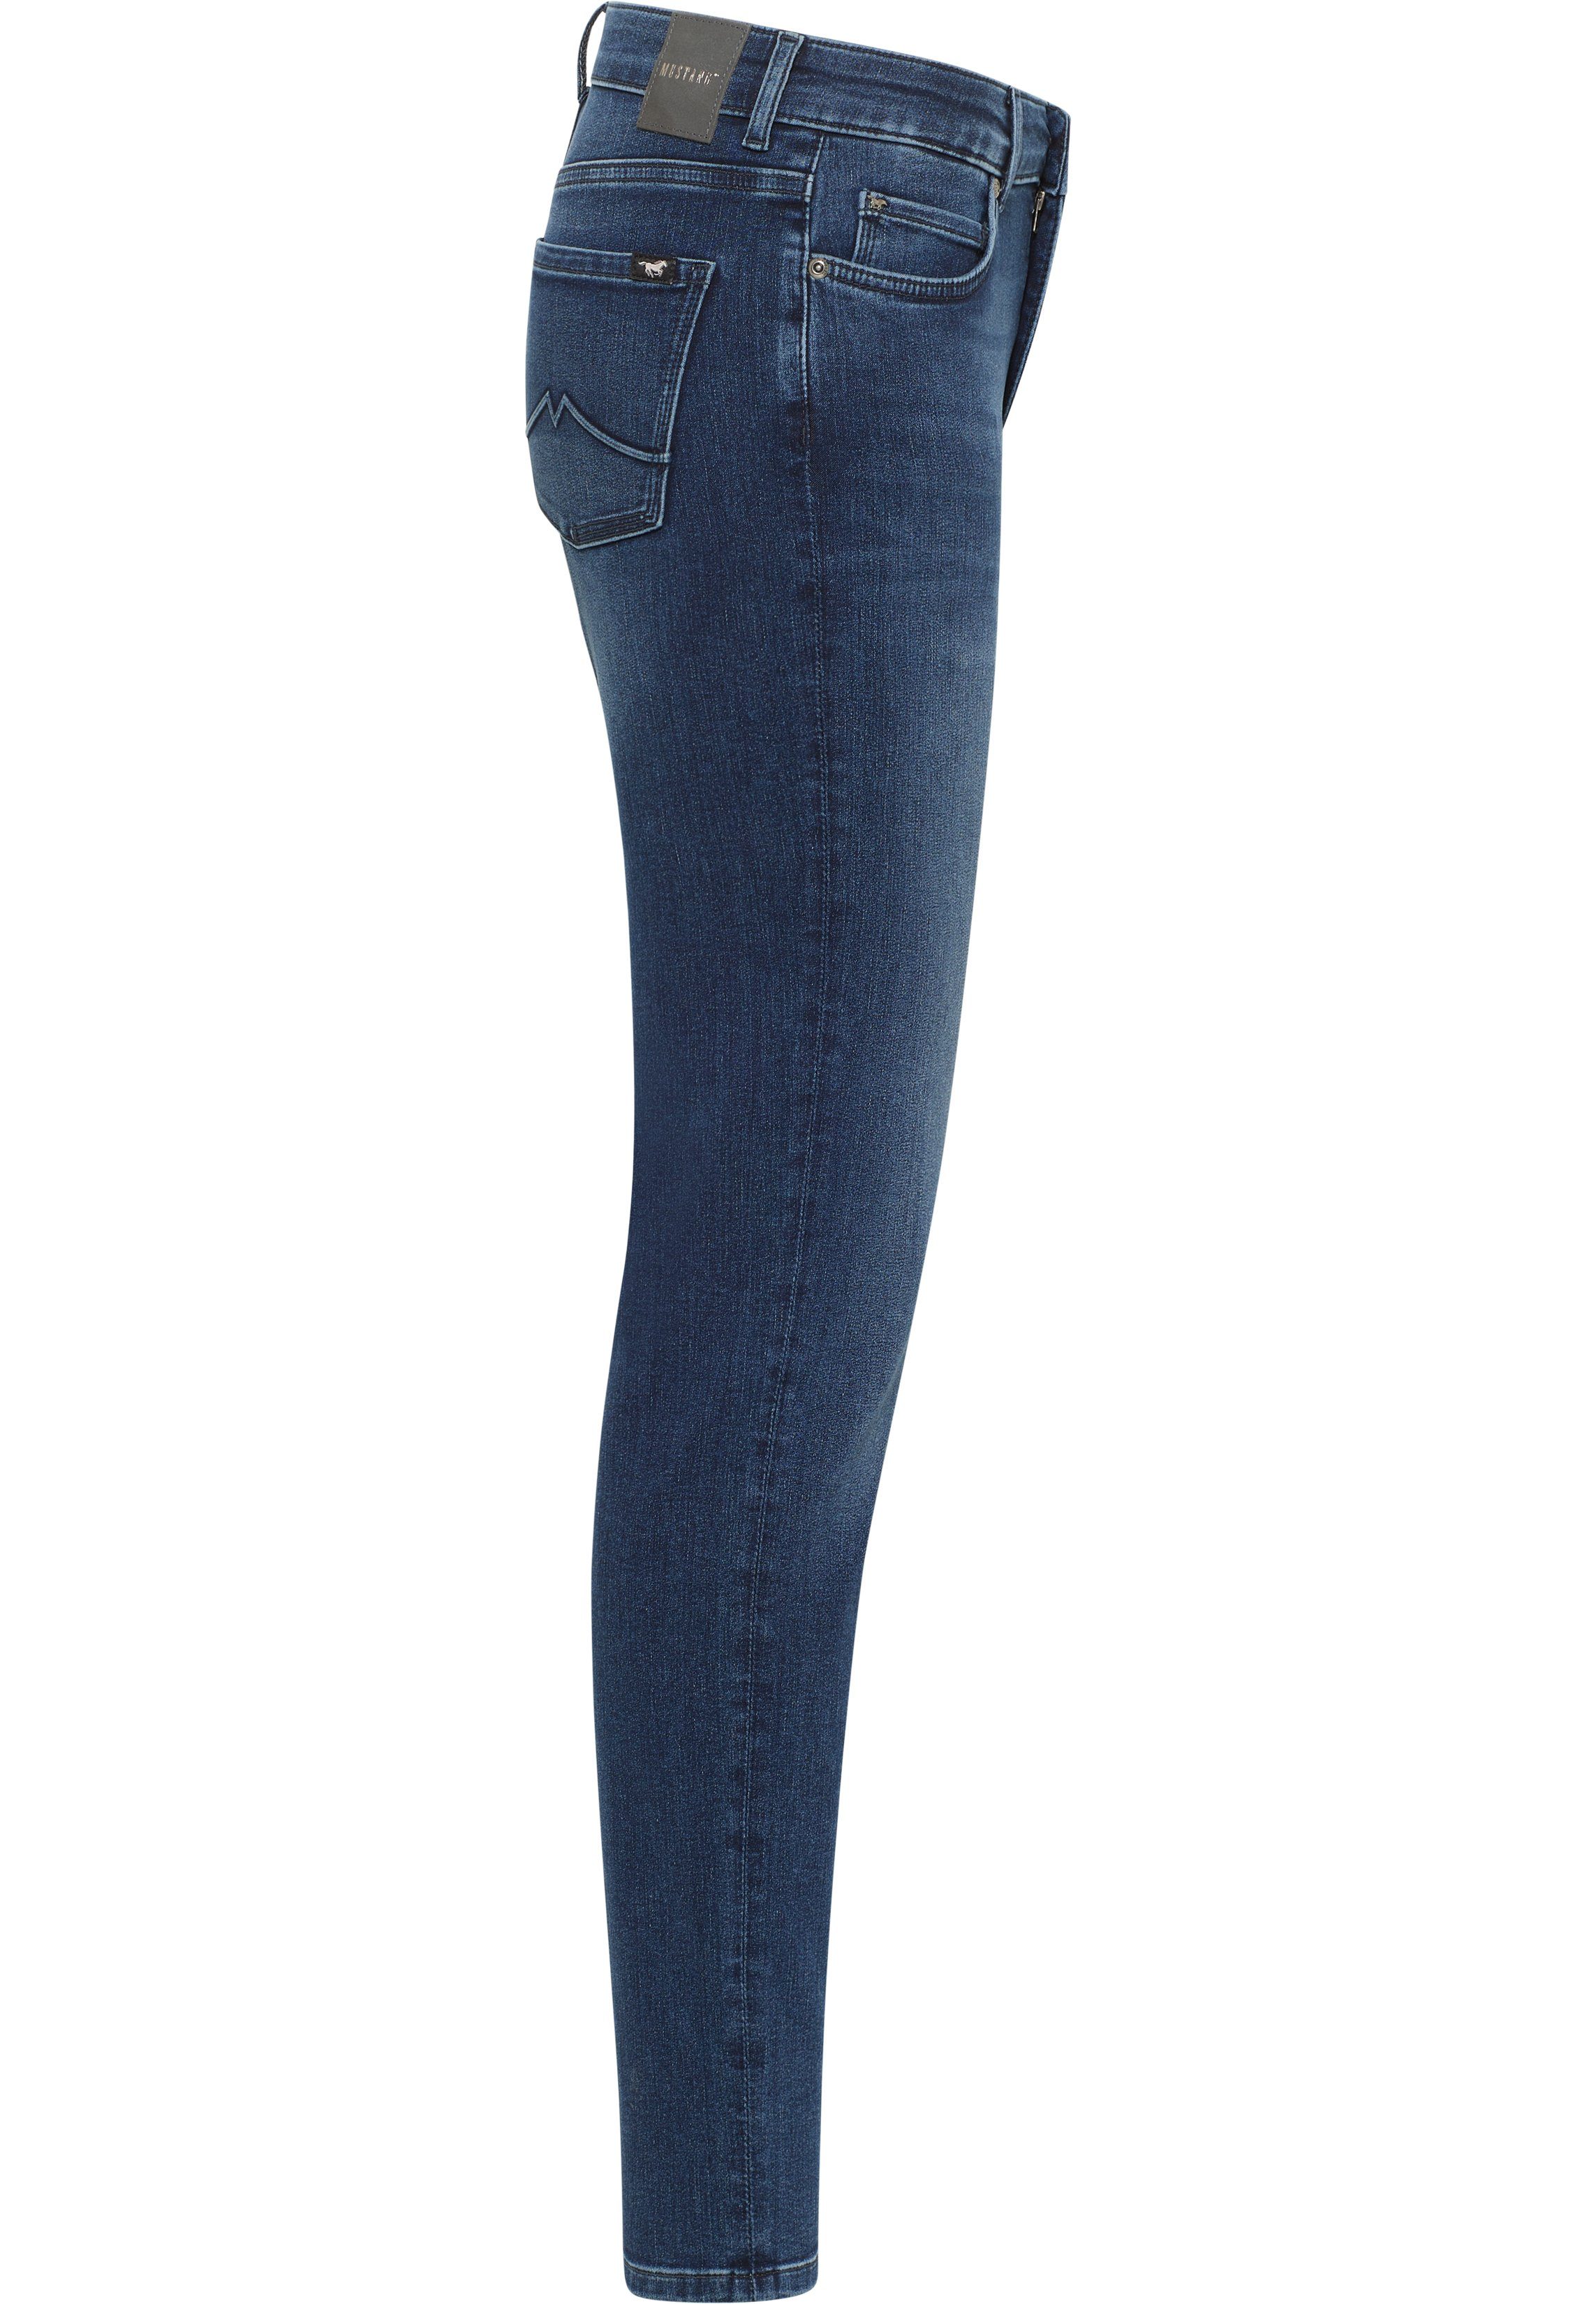 MUSTANG Slim-fit-Jeans Slim dunkelblau-5000802 Style Relaxed Crosby